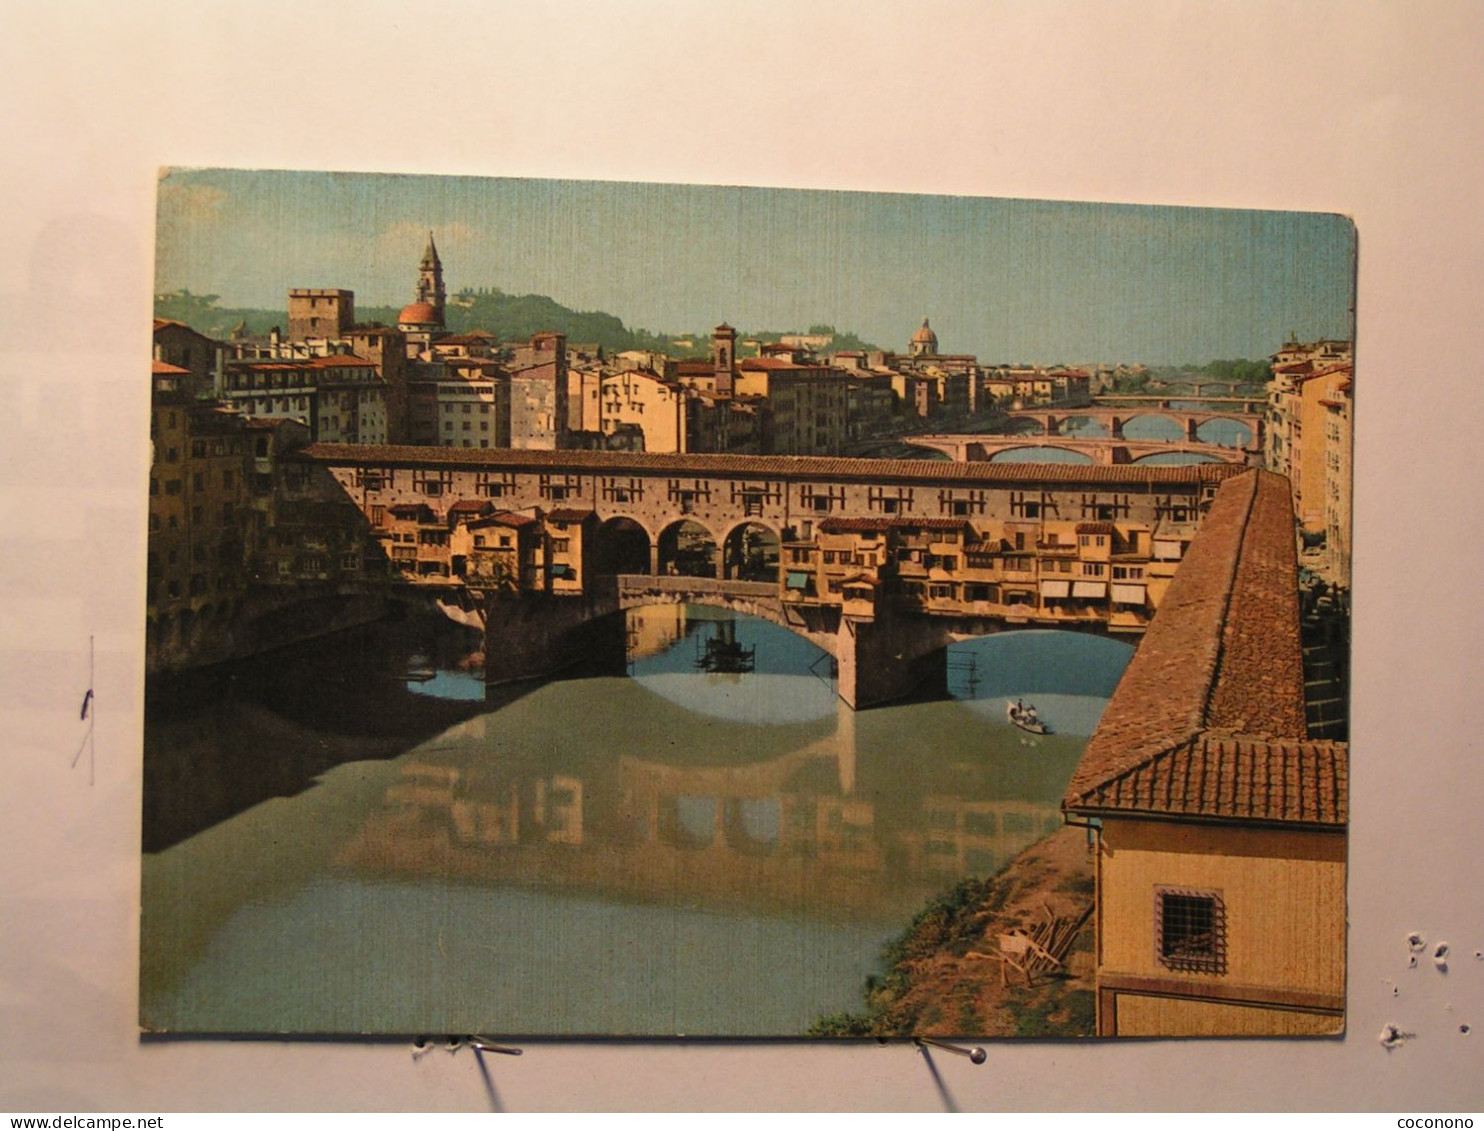 Firenze (Florence) - Ponte Vecchio - Firenze (Florence)